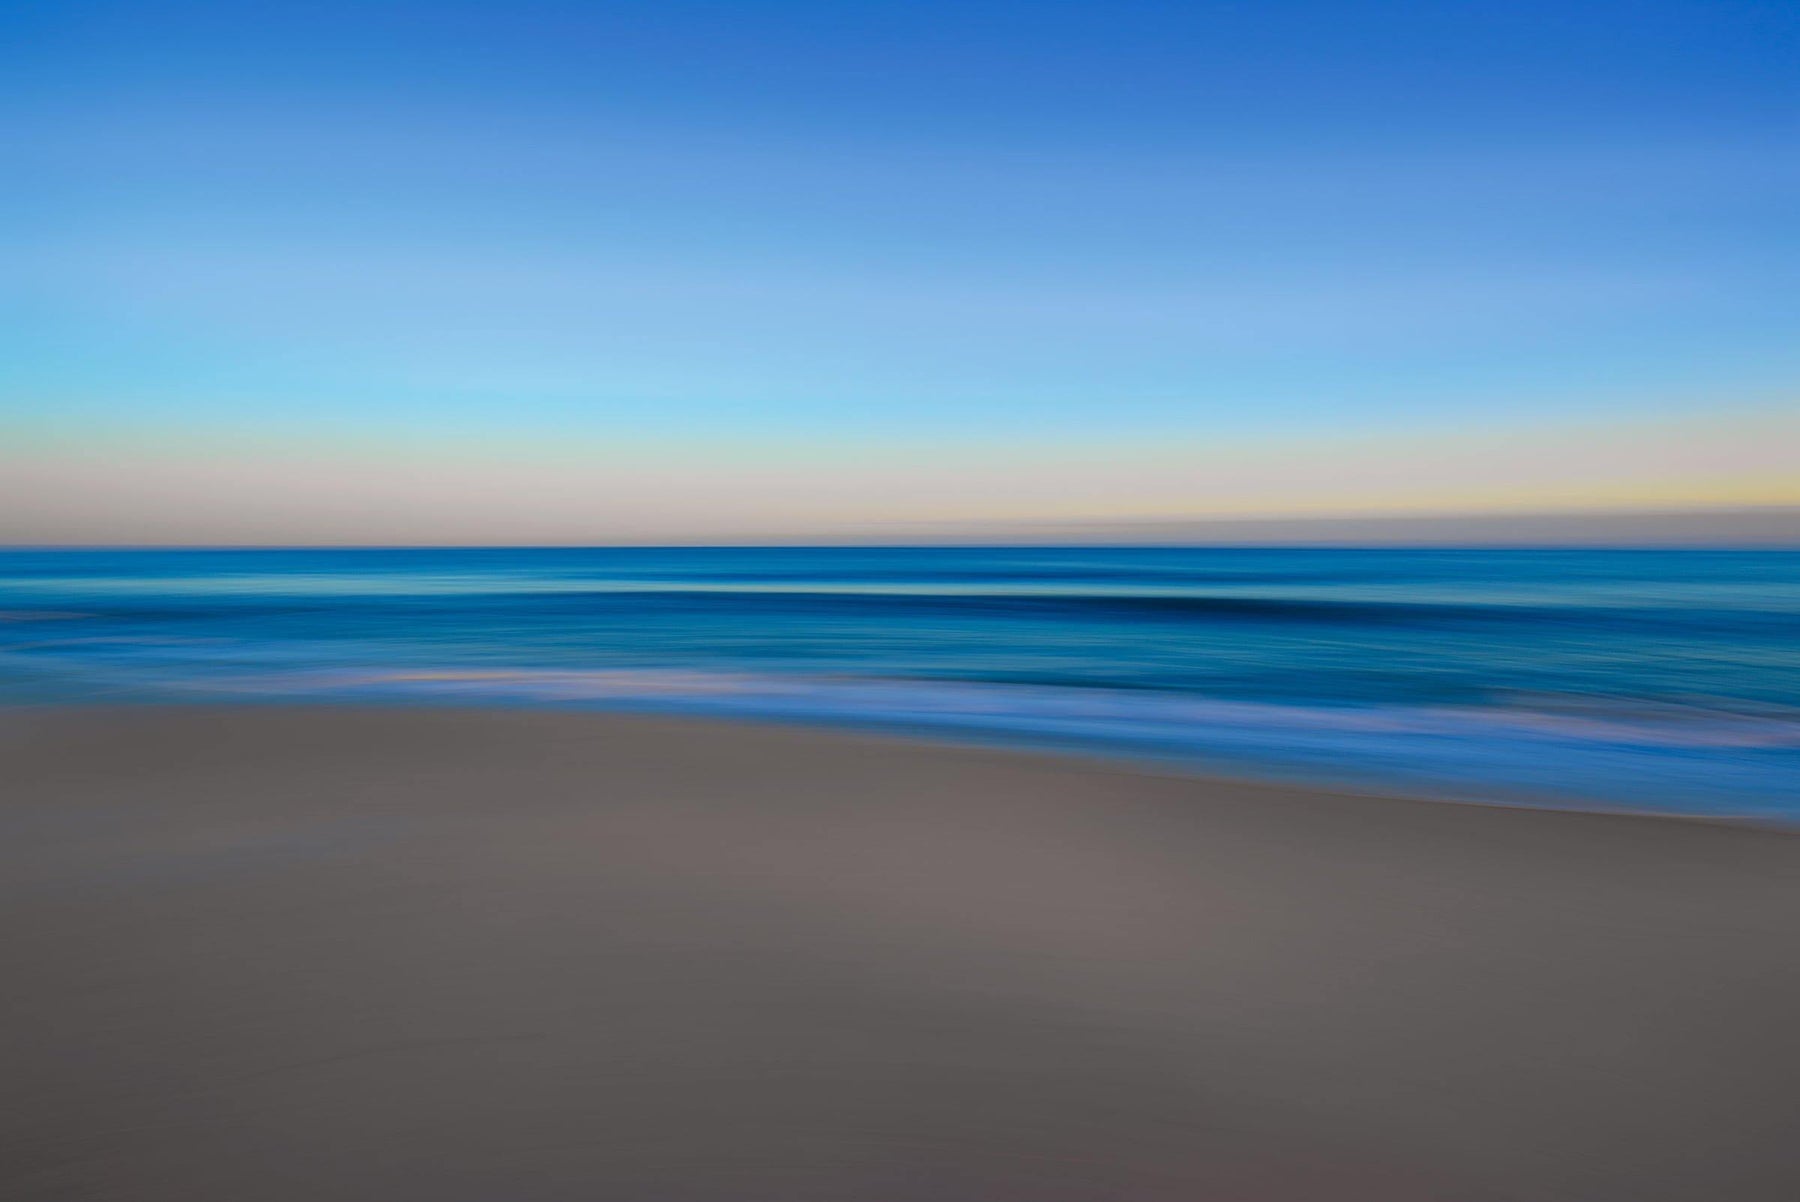 Blurred sand beach ocean and sky in Montauk Long Island